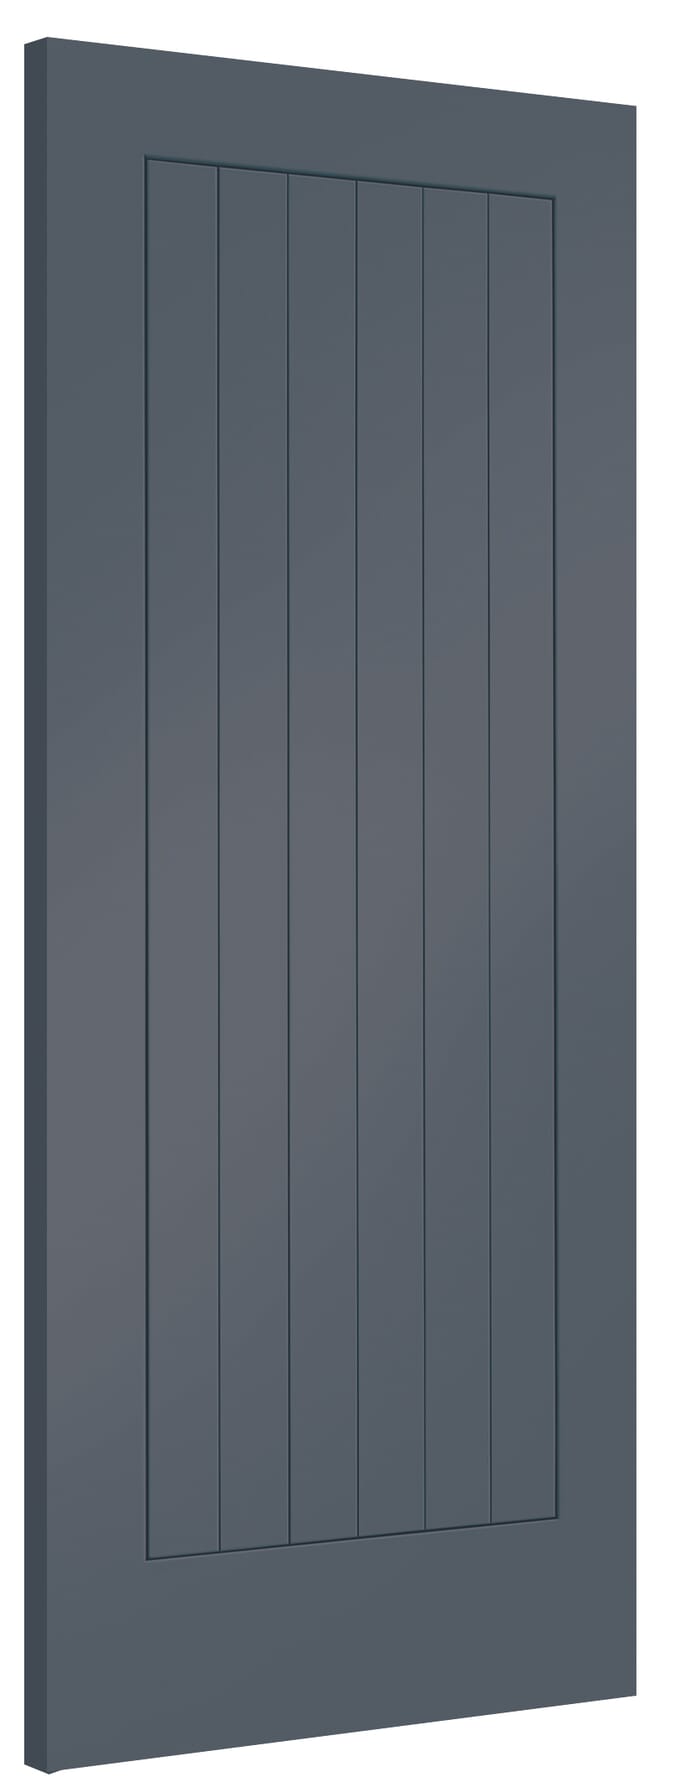 686x1981x44mm (27") Suffolk Cinder Grey Fire Door